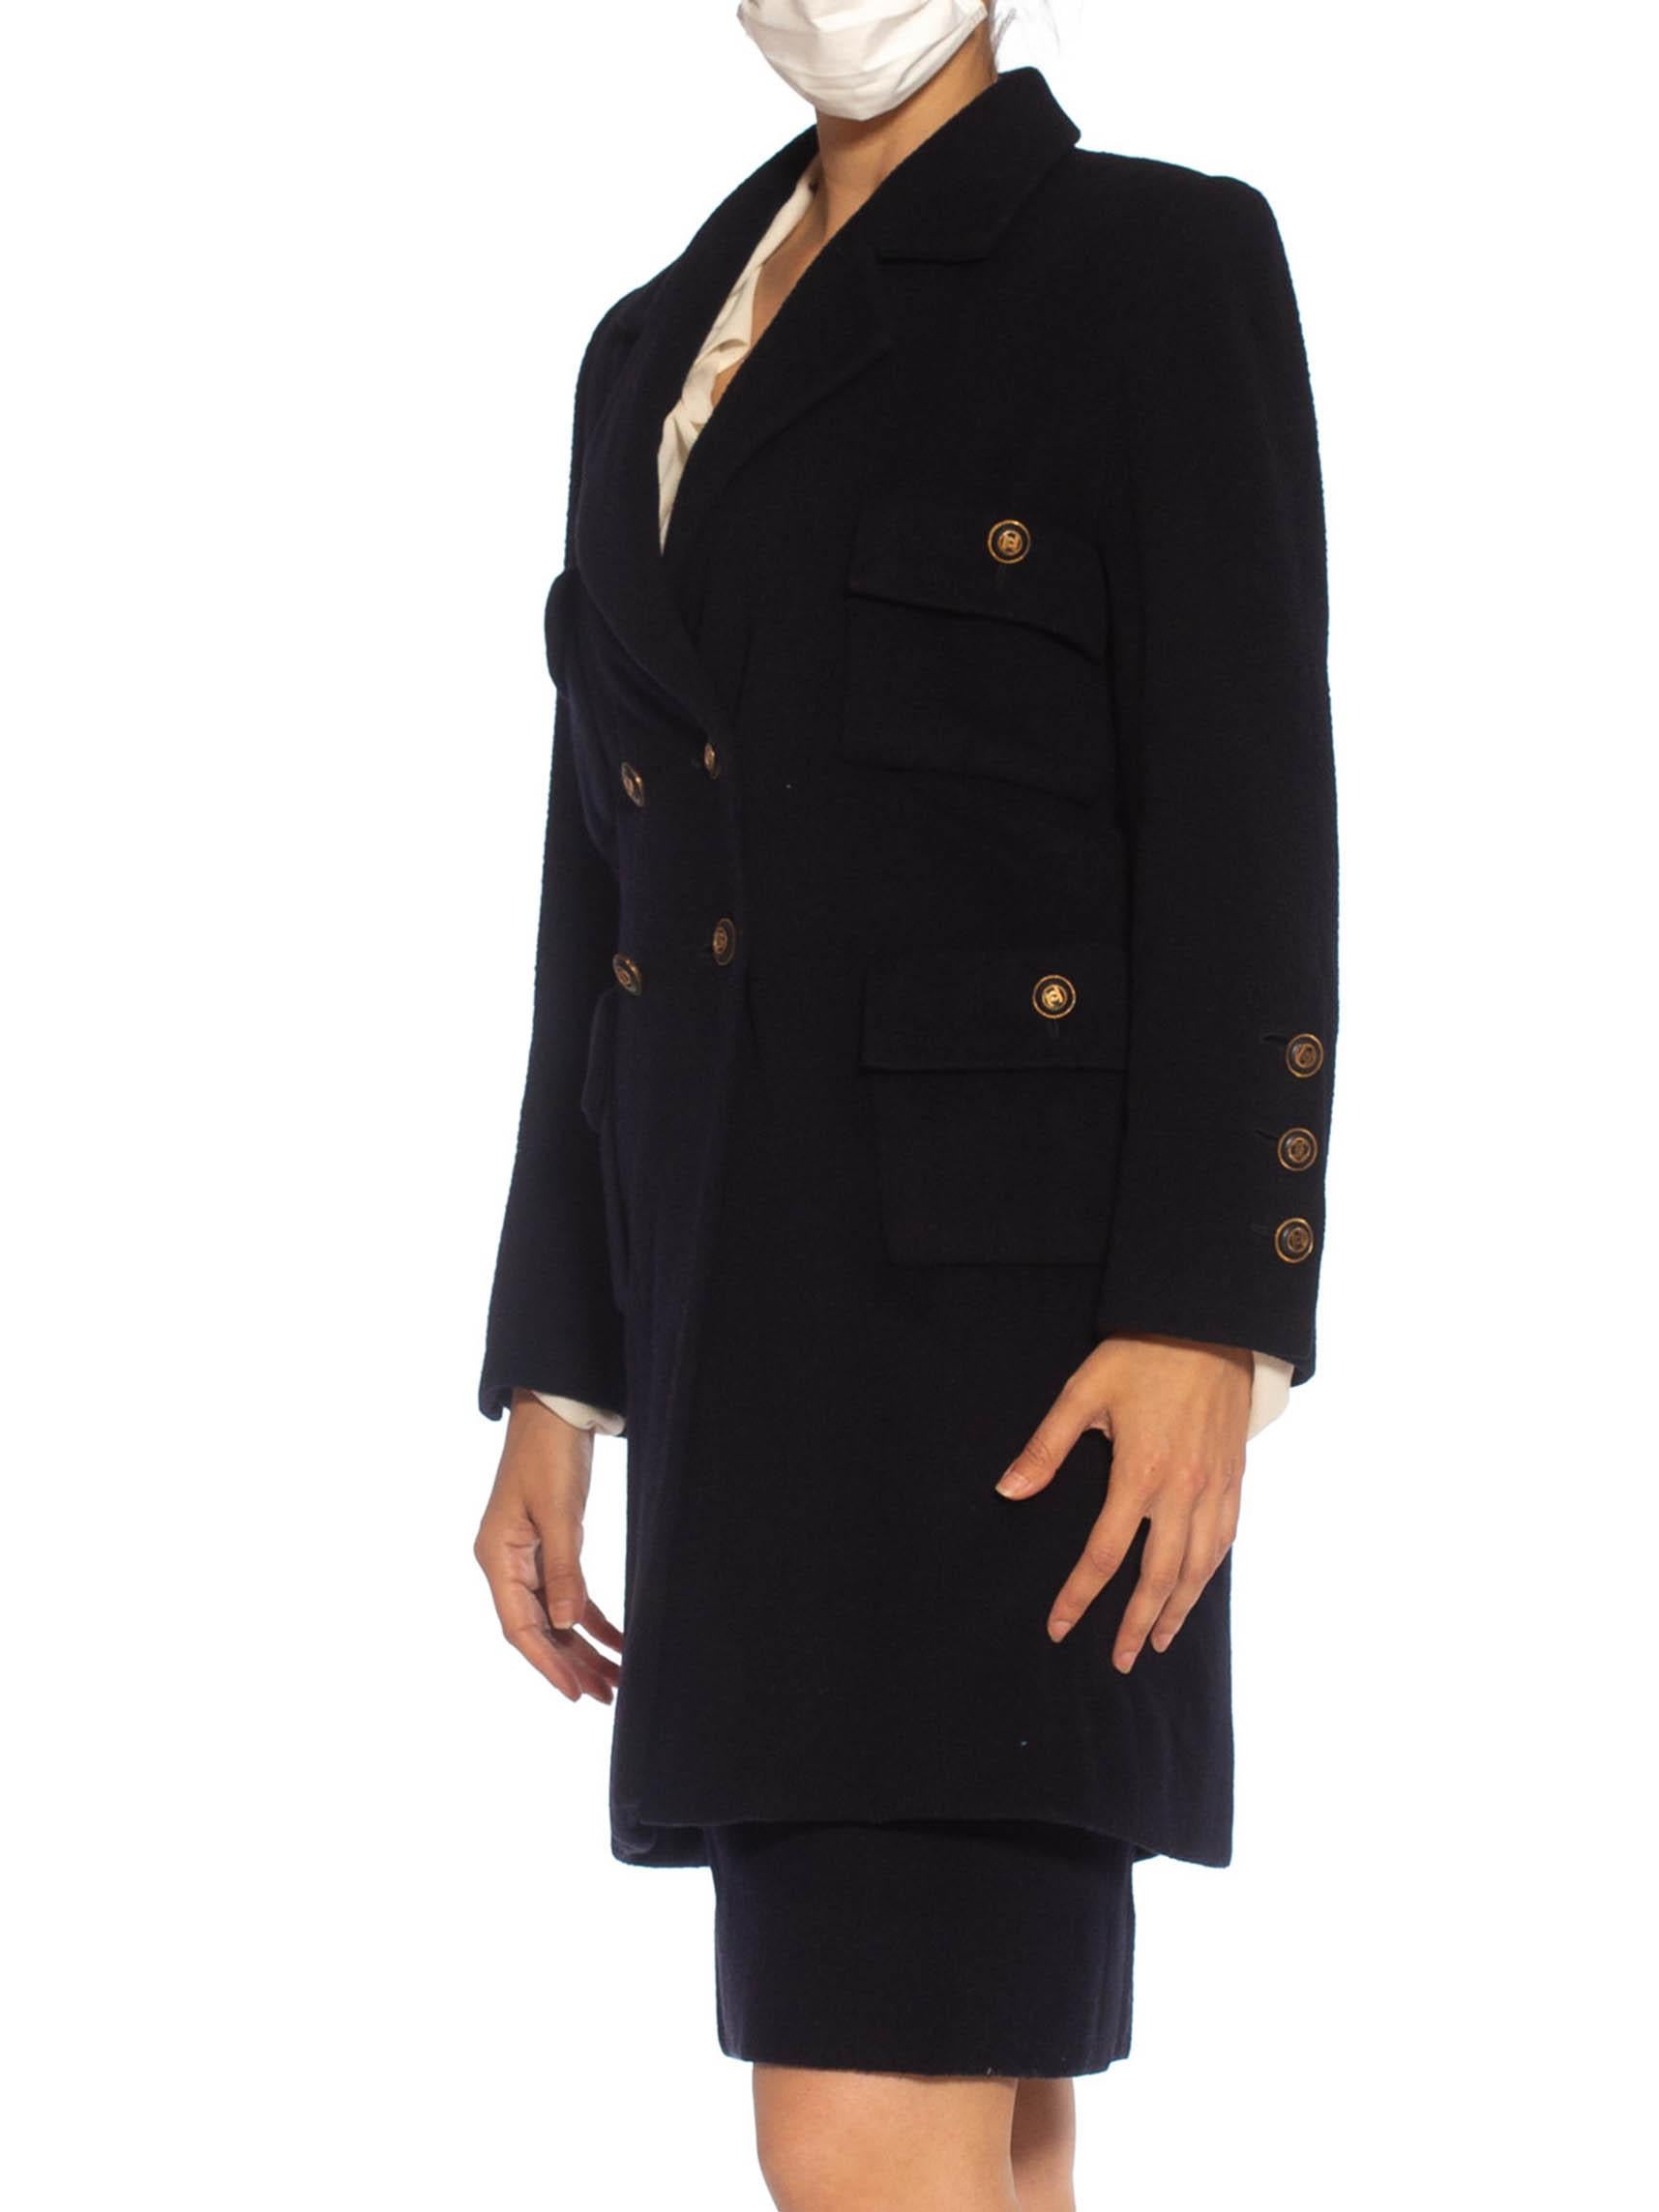 1980S CHANEL Navy Blue Haute Couture Cashmere Blend Boiled Wool 3/4 Length Coat & Pencil Skirt Suit